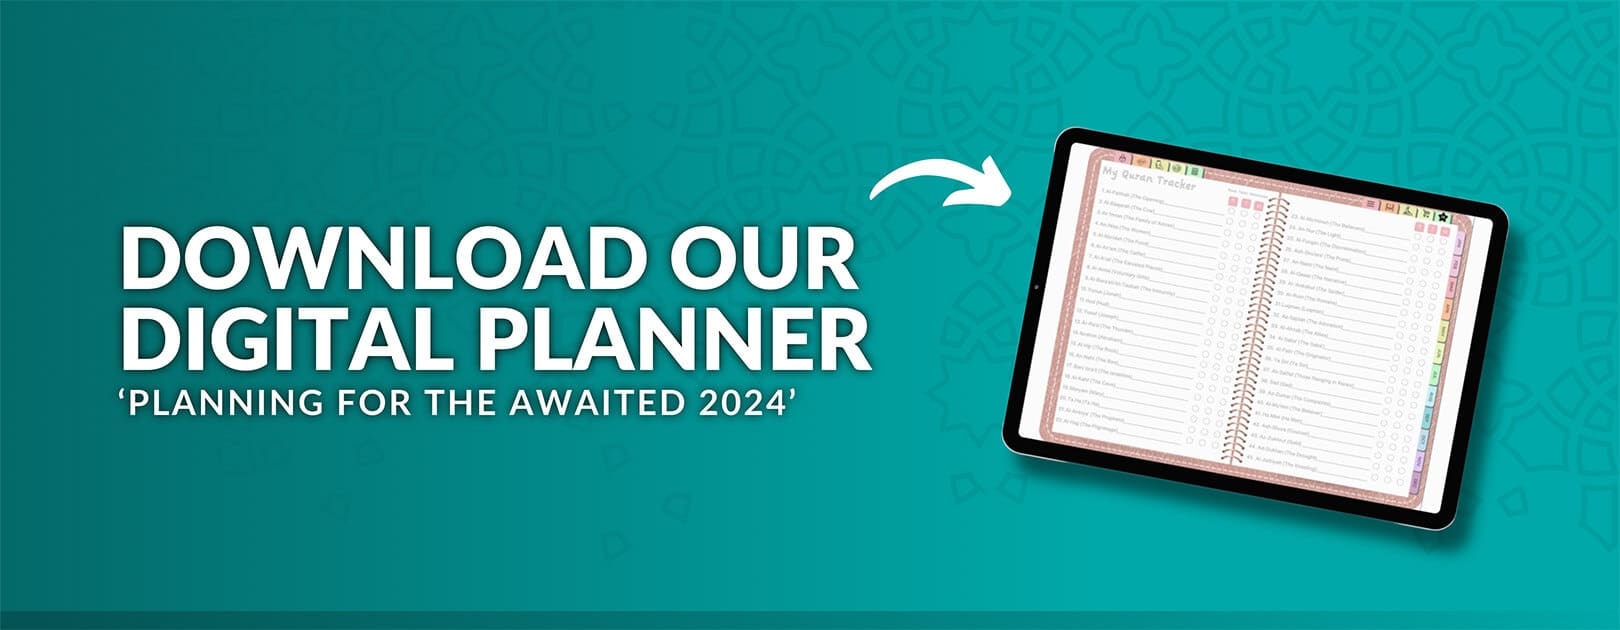 Download our Digital Planner